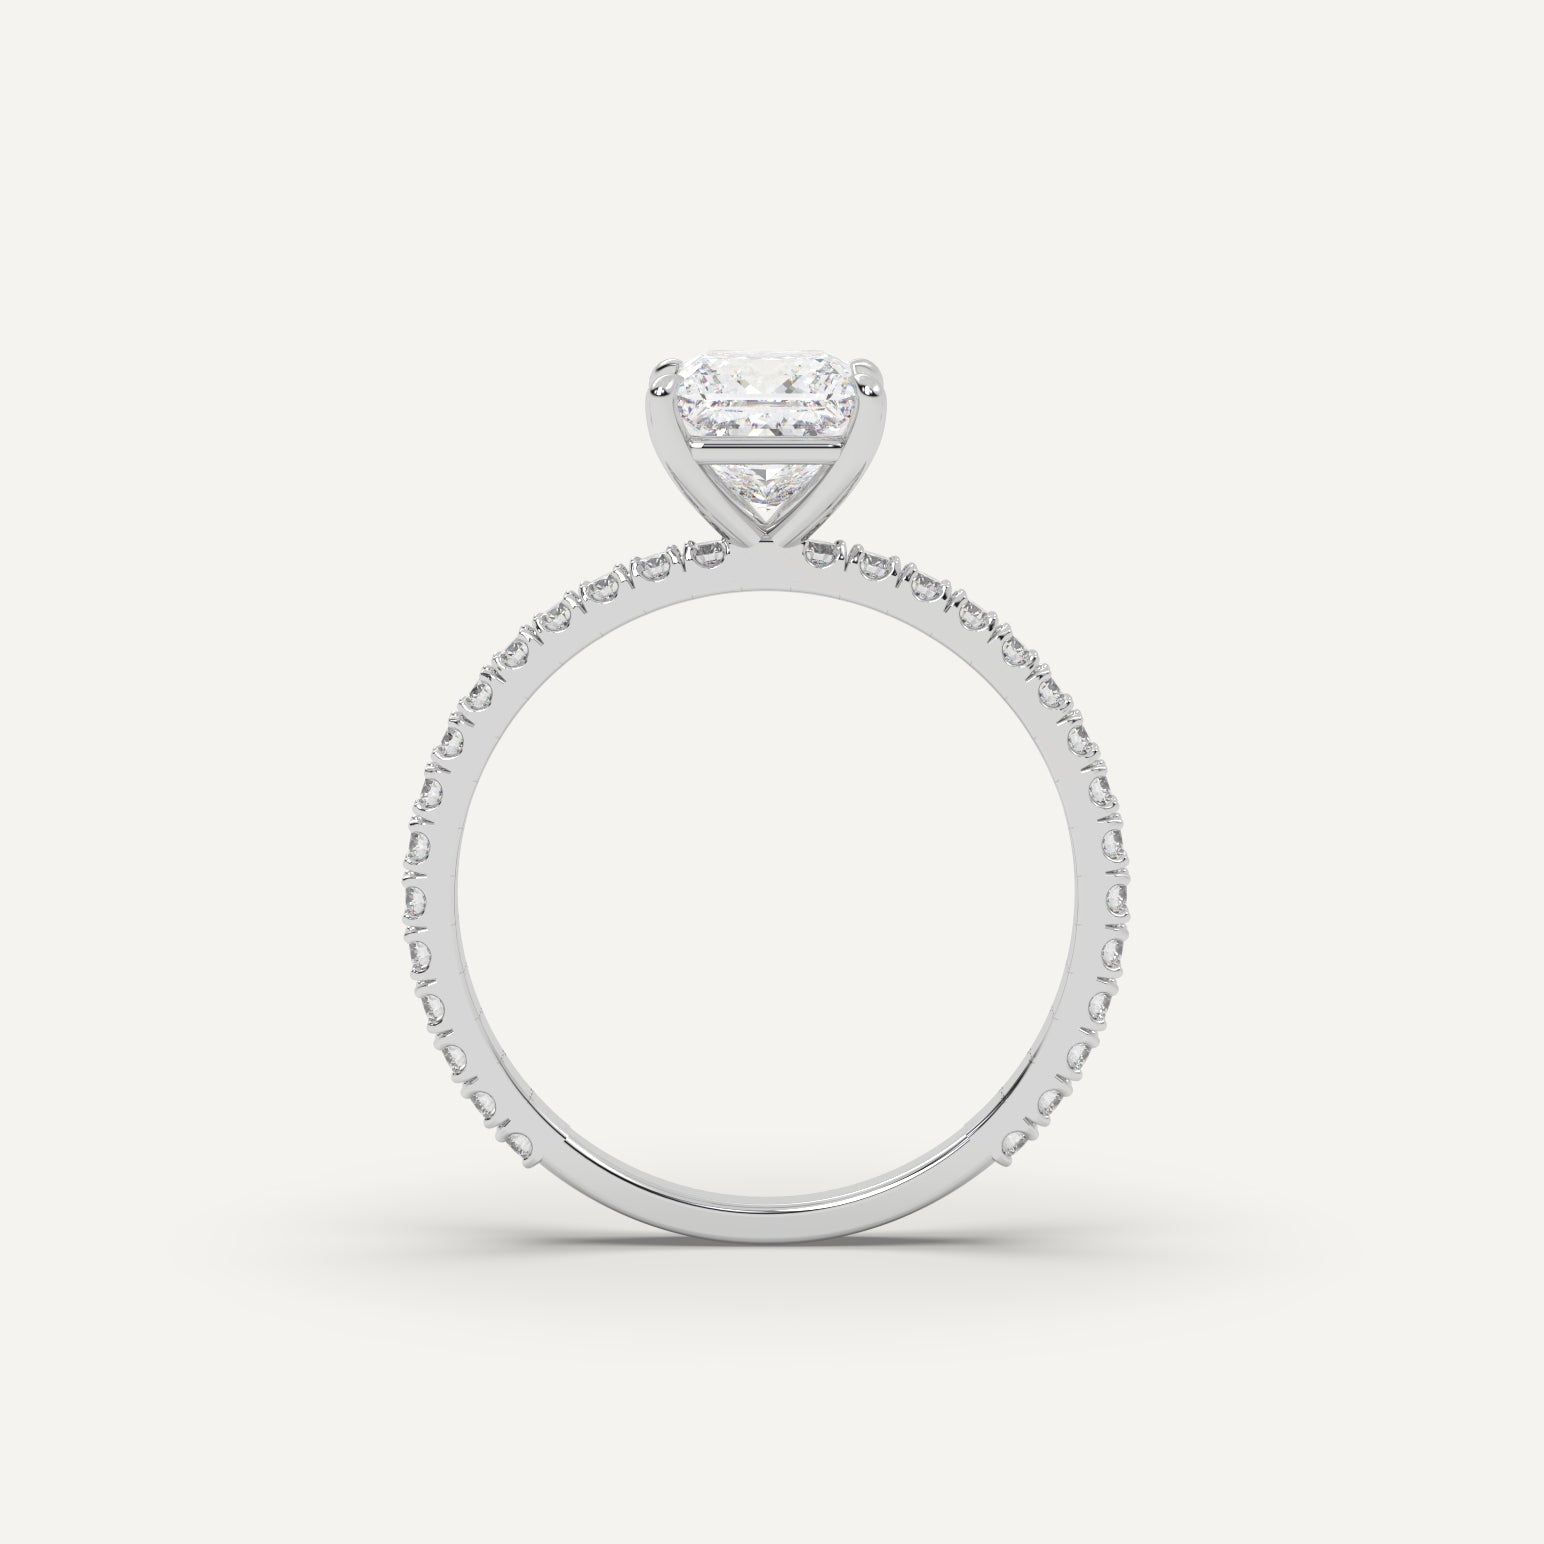 Princess Cut Diamond Engagement Ring - 1 carat